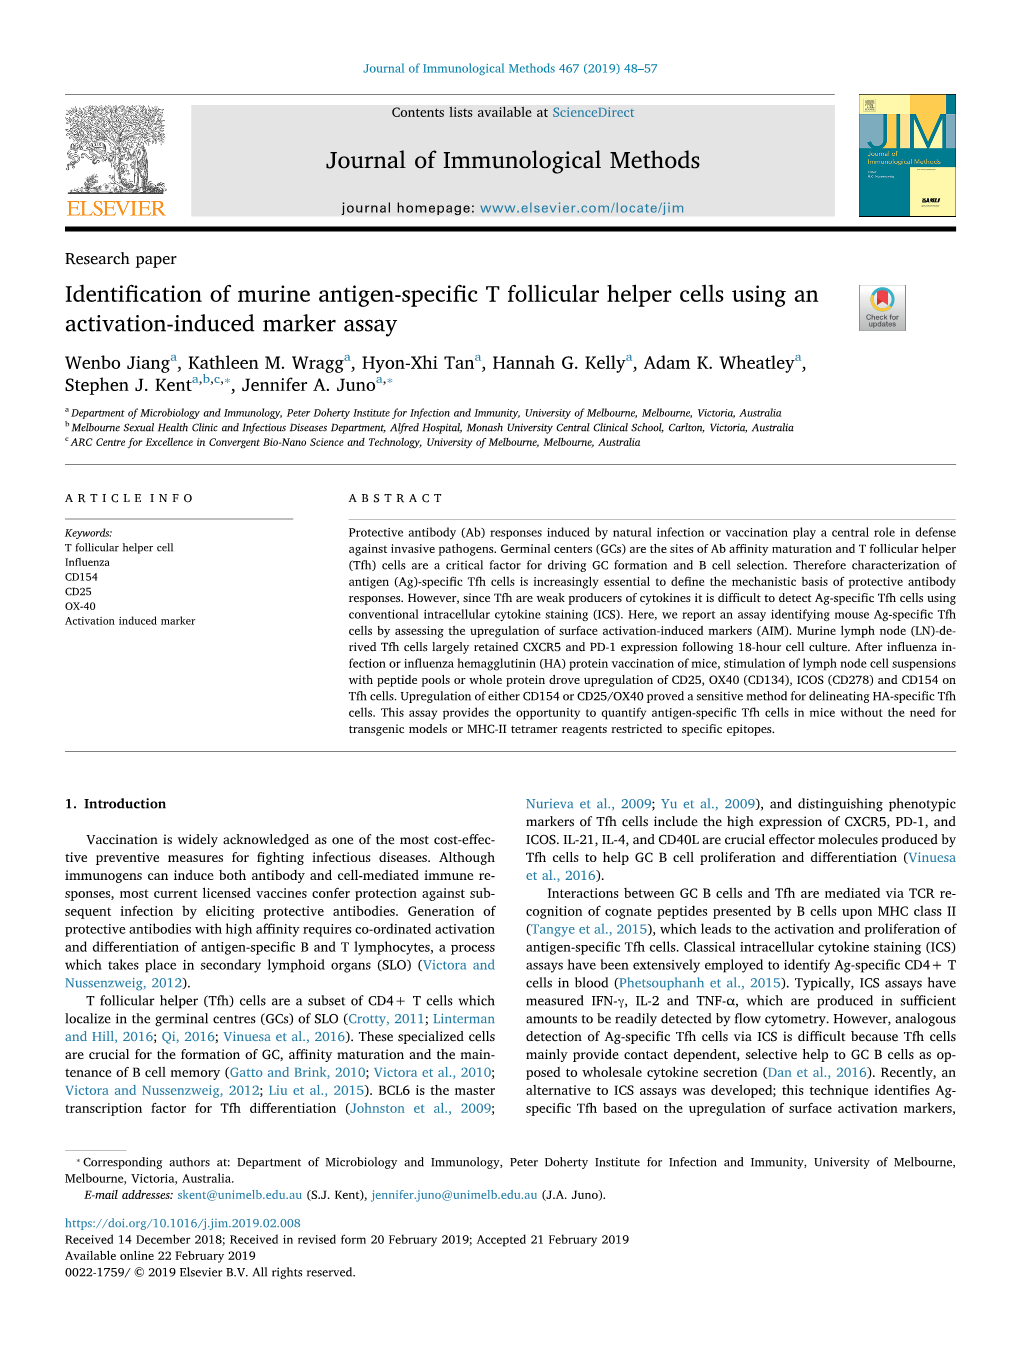 Identification of Murine Antigen-Specific T Follicular Helper